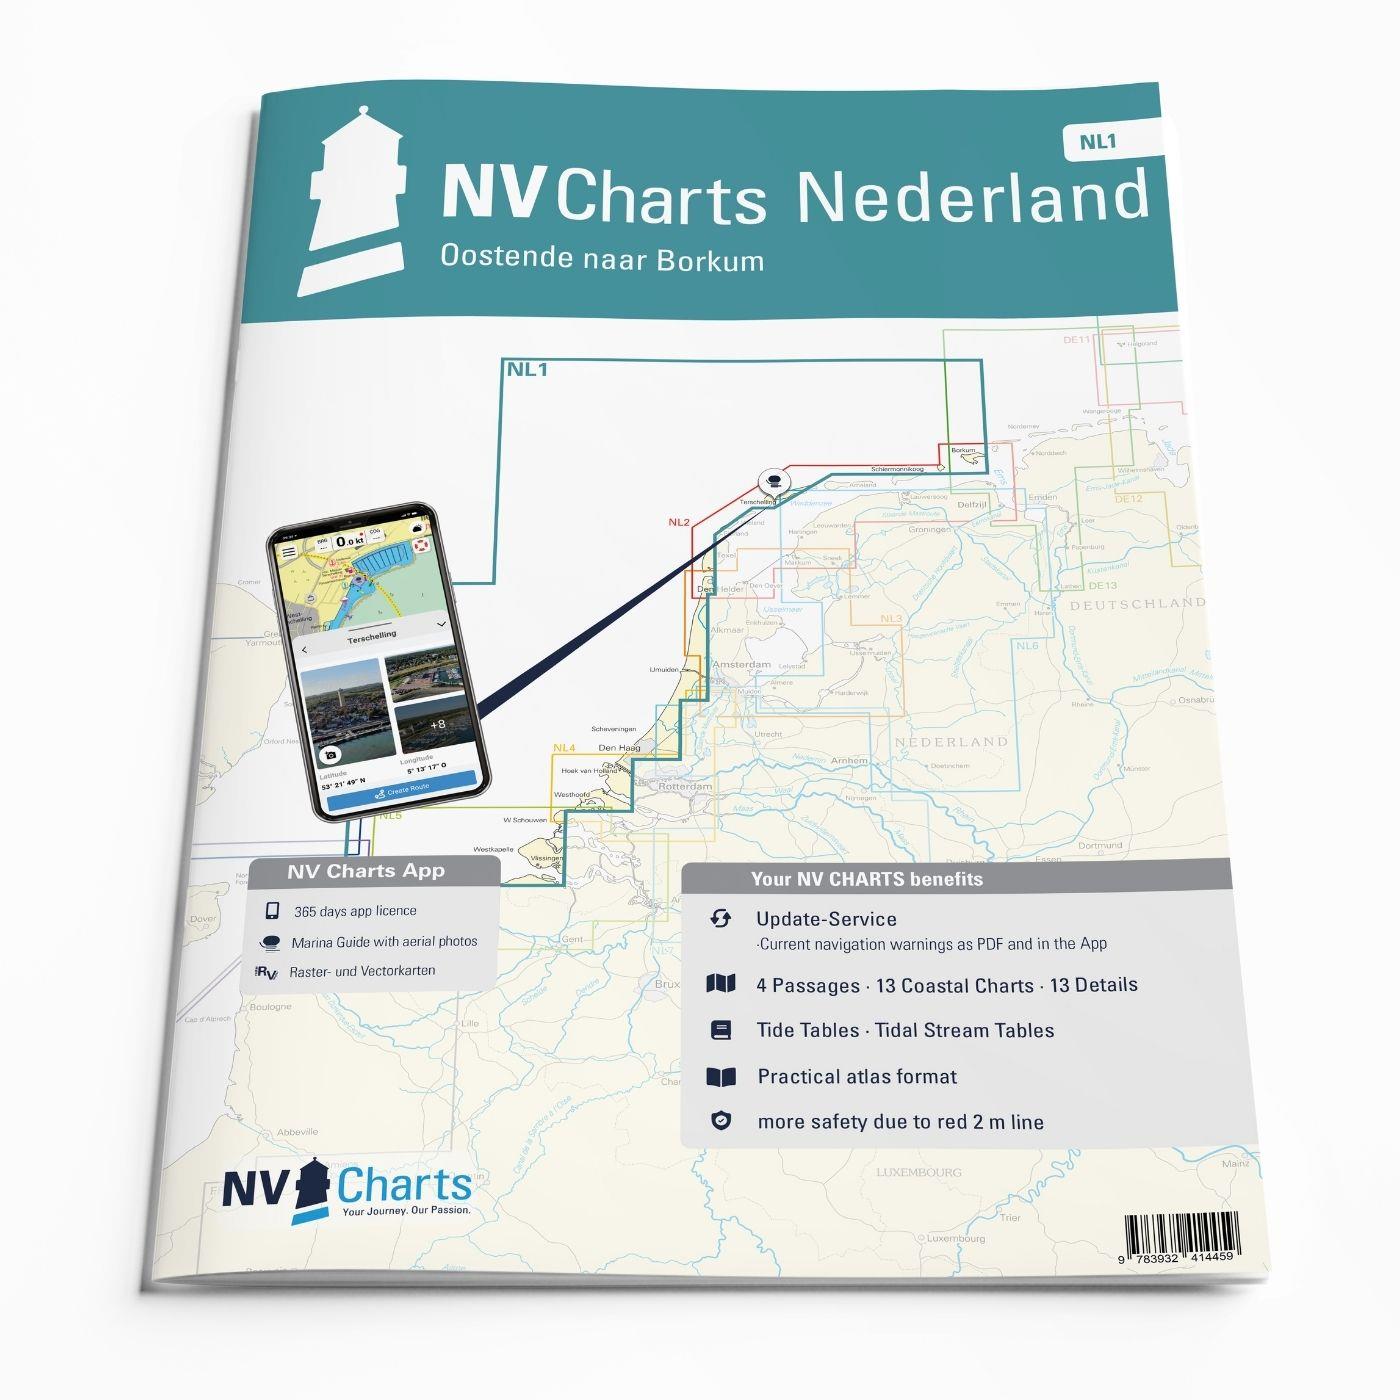 ABO - NV Charts Nederland NL1 - Borkum naar Oostende